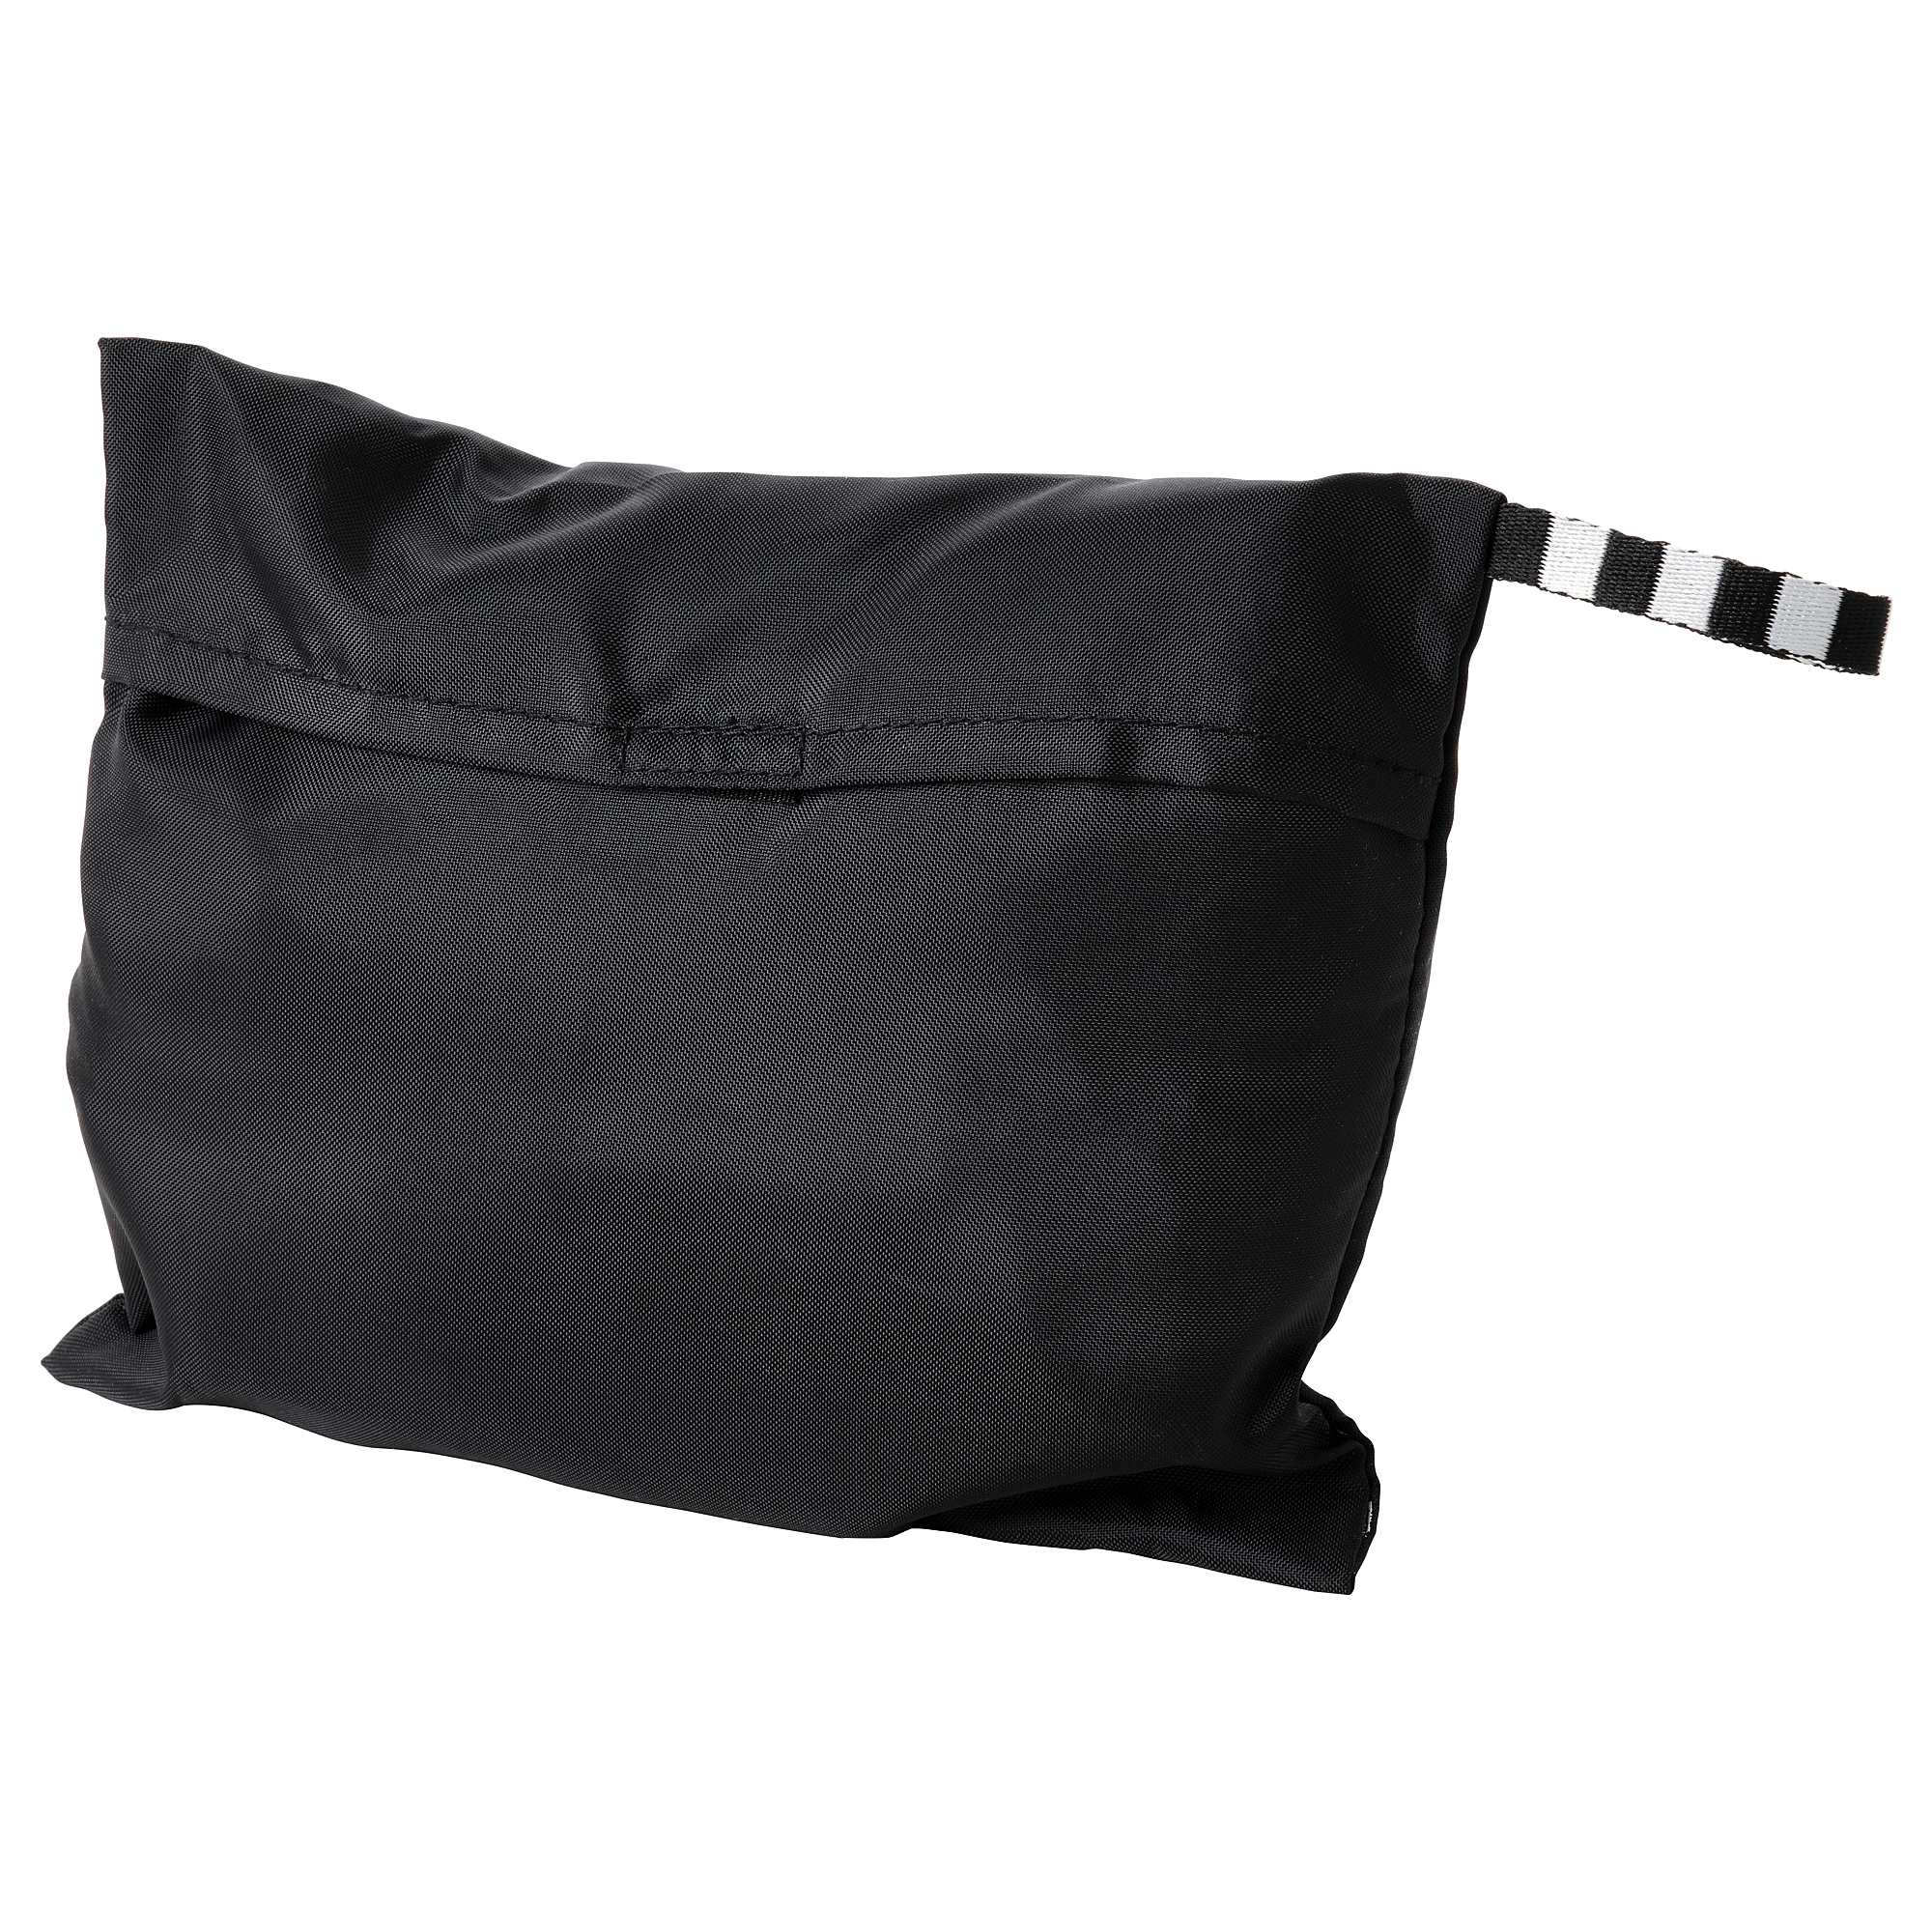 RÄCKLA bag, foldable